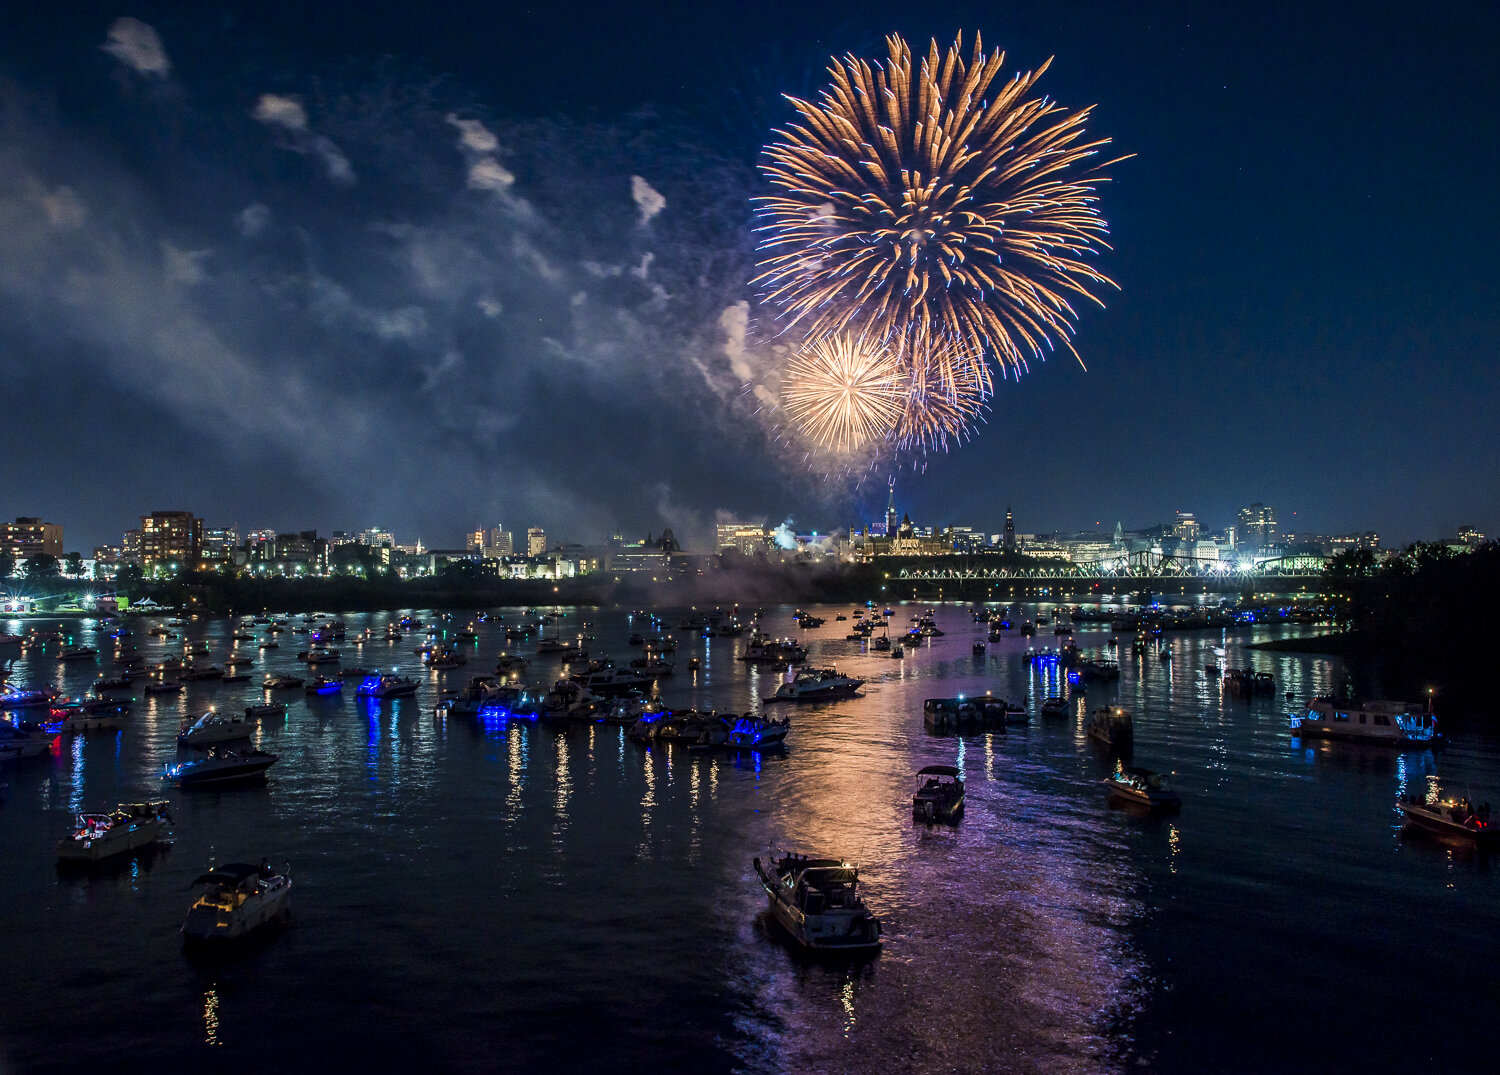  Canada Day fireworks in Ottawa. 2018. 